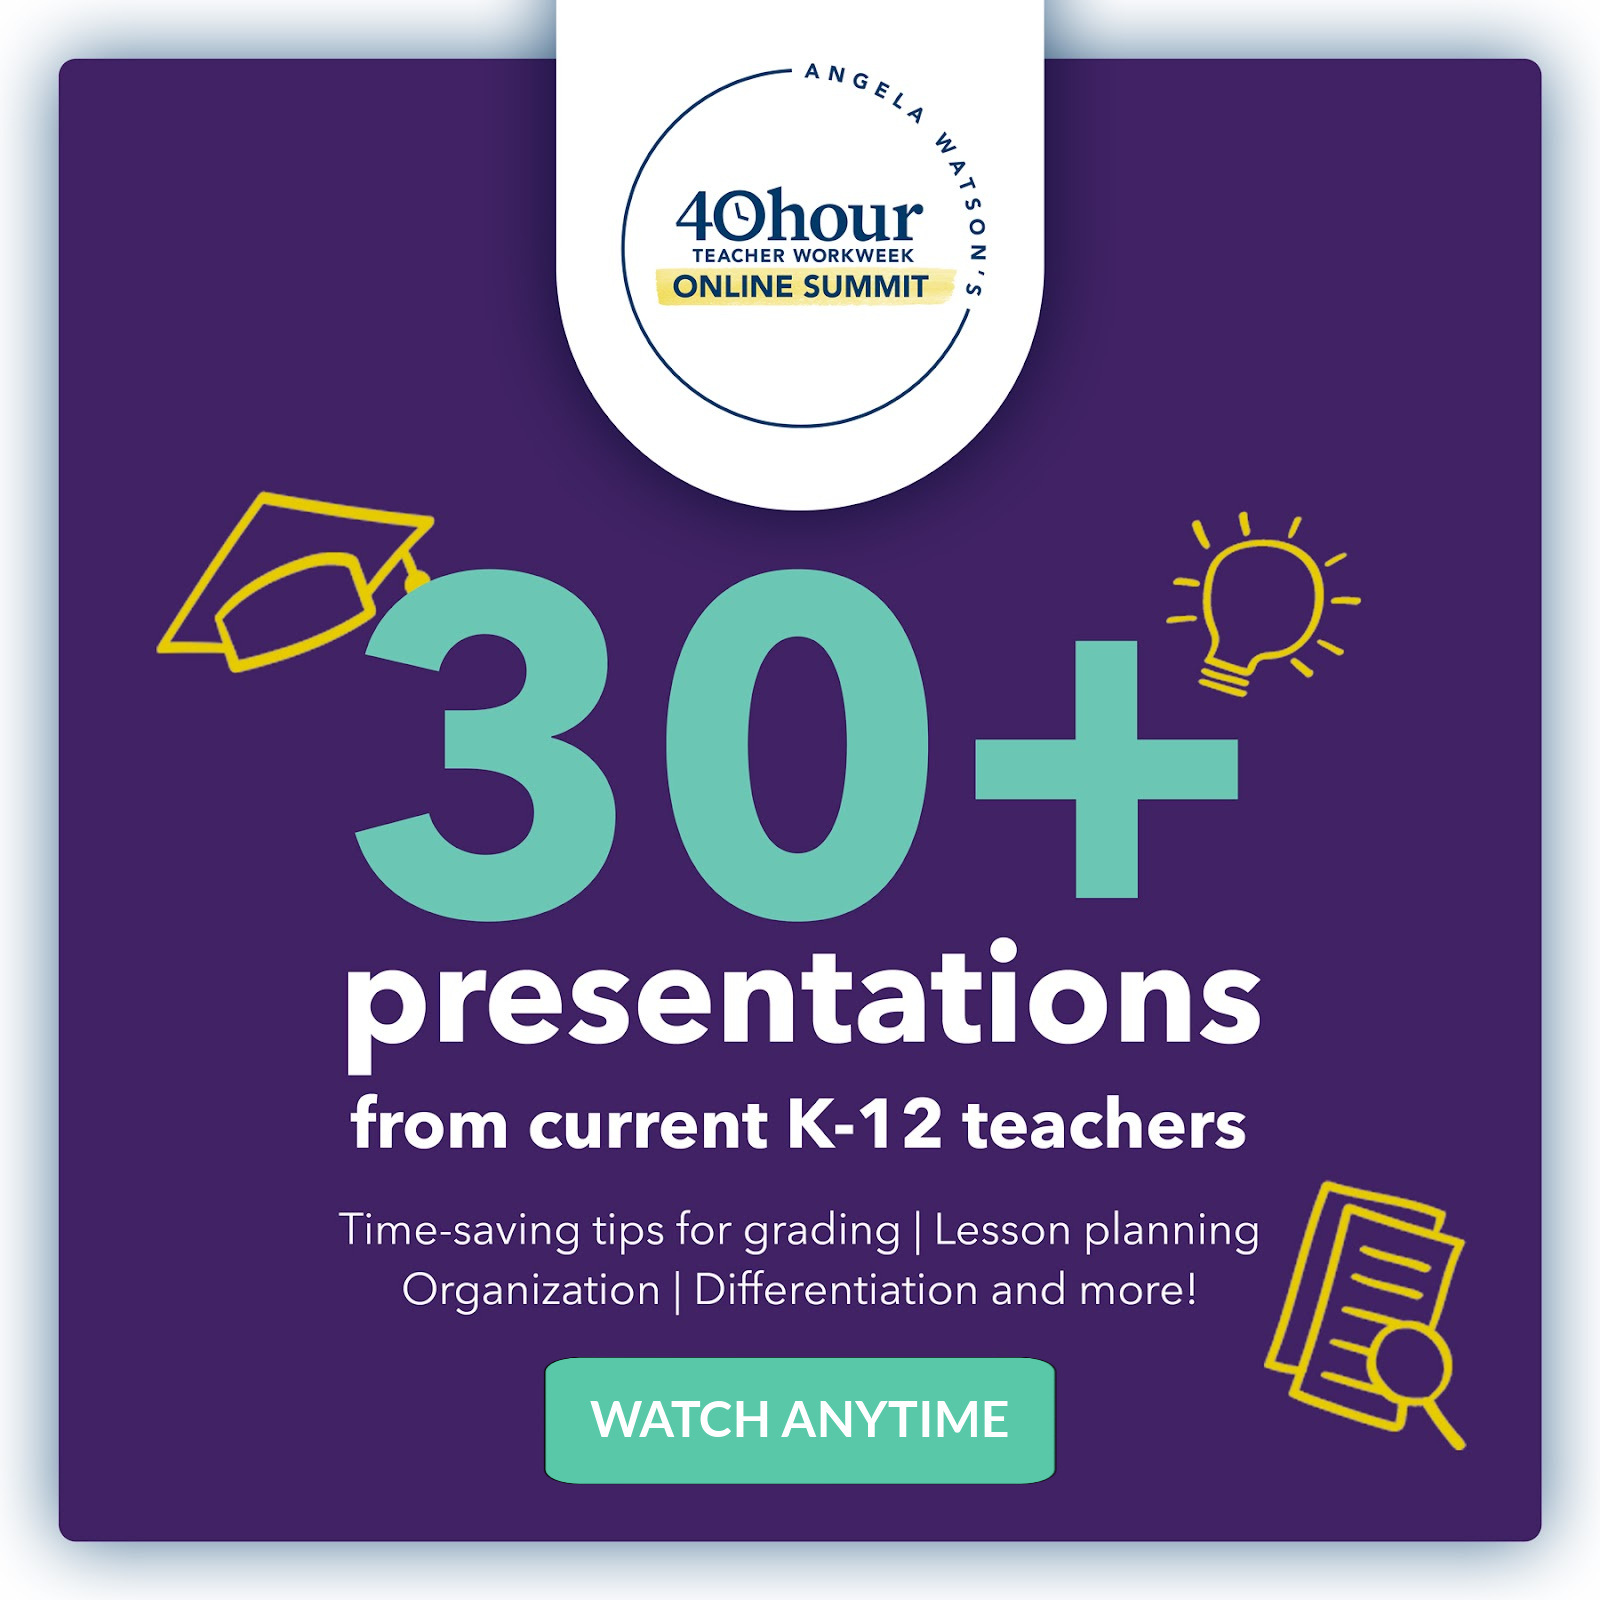 40 Hour Teacher Workweek Online Summit brand image